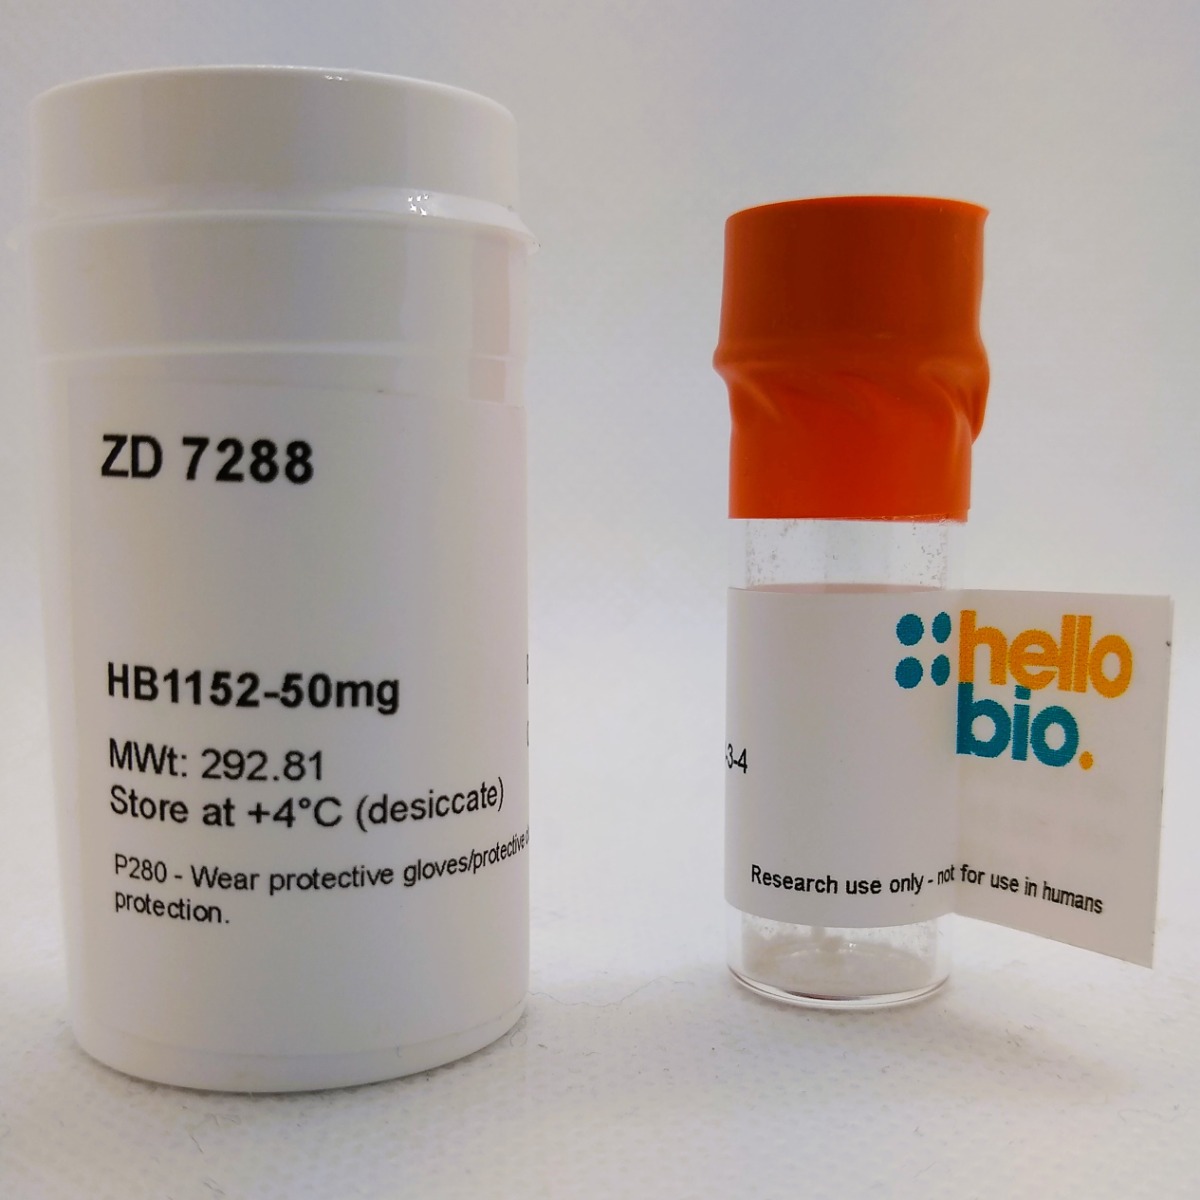 ZD 7288 product vial image | Hello Bio